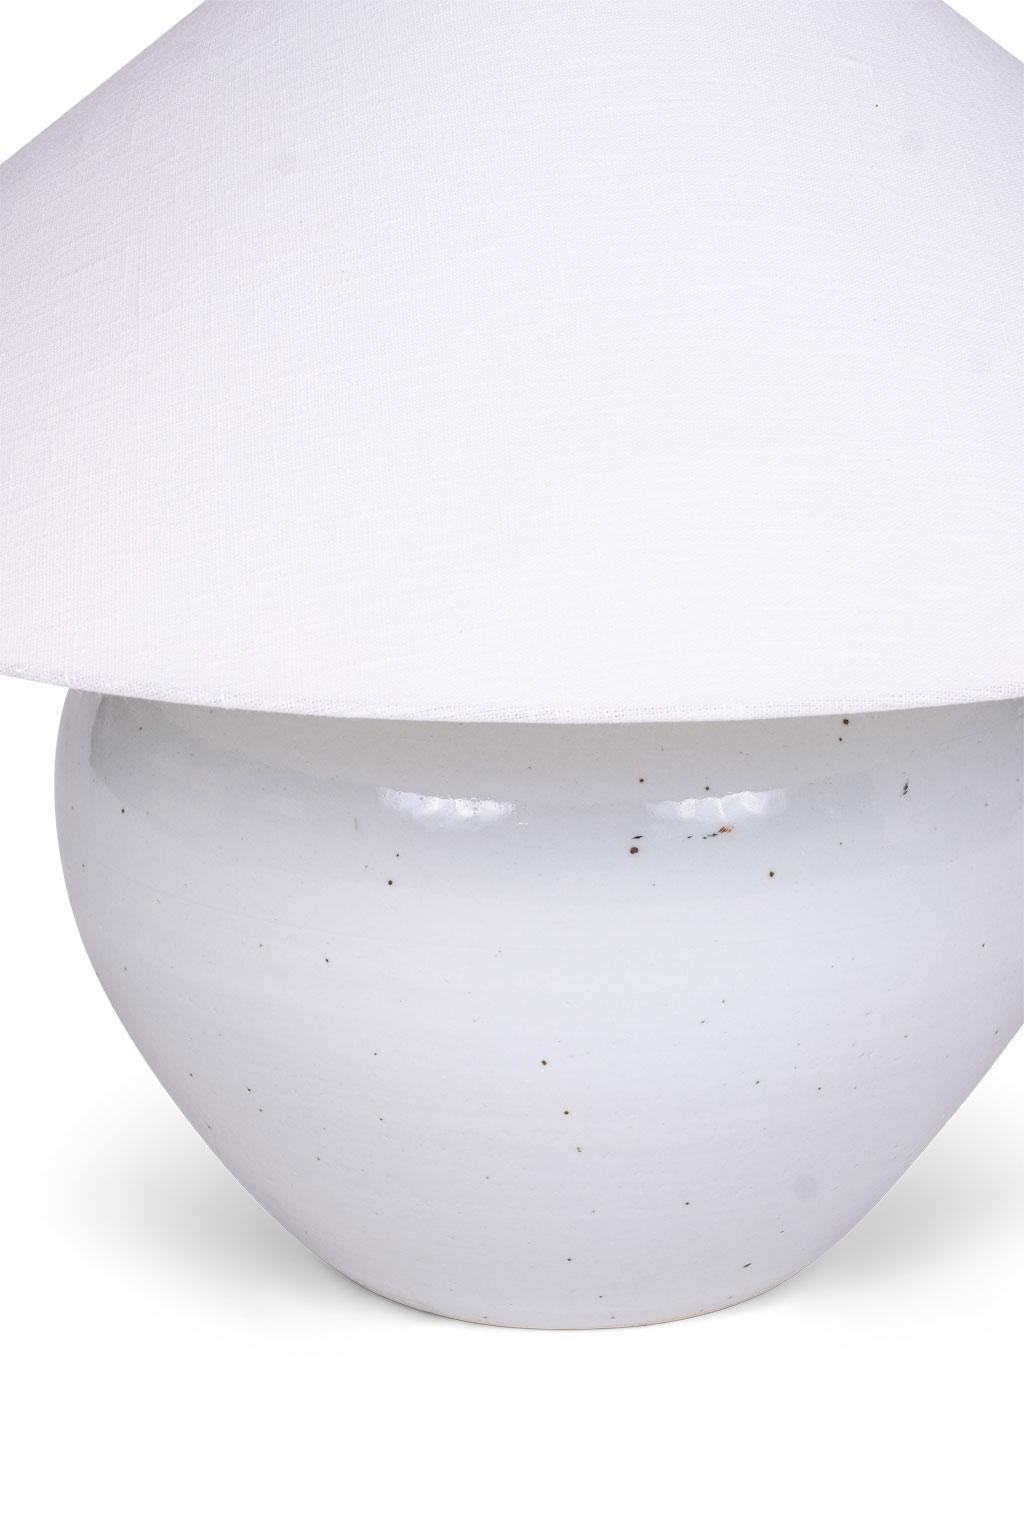 Primitive Round White Glazed Pottery Lamp